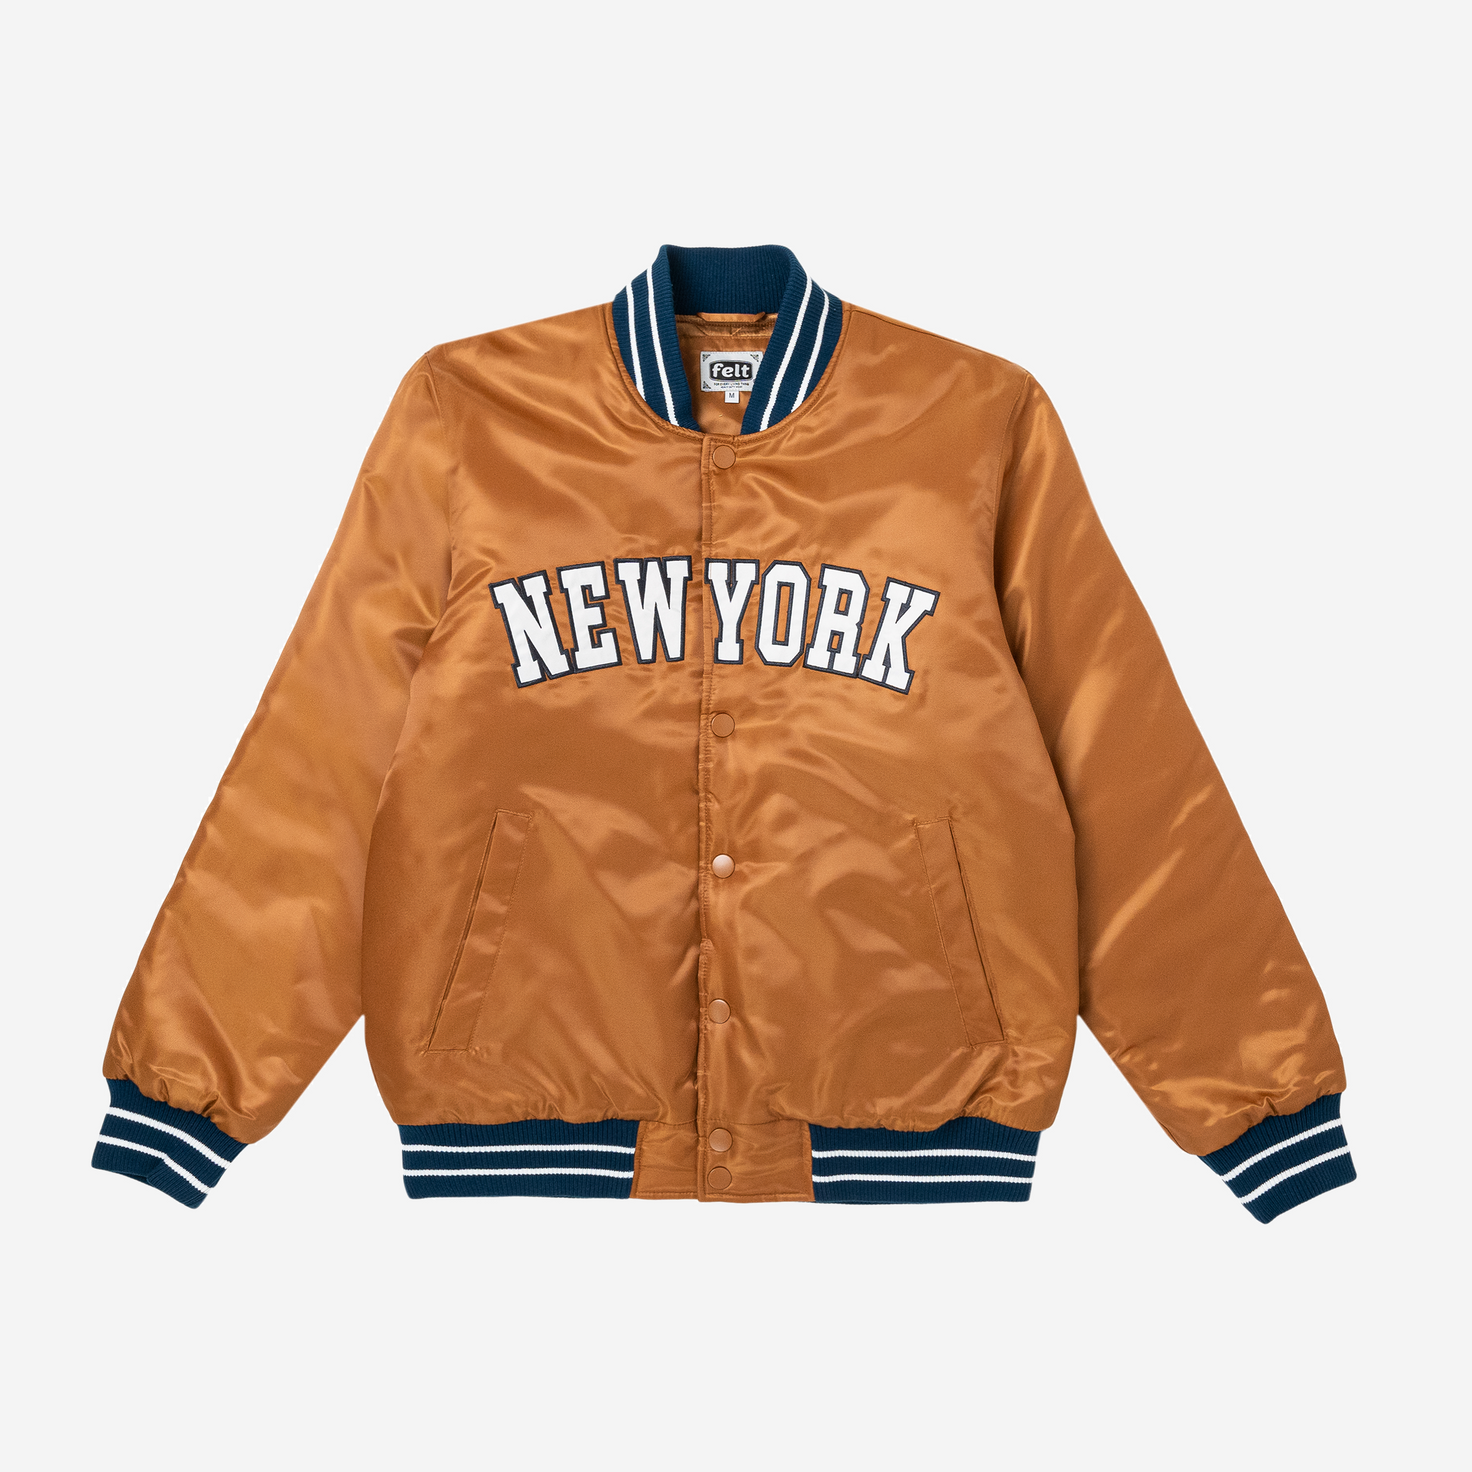 New York All City Jacket